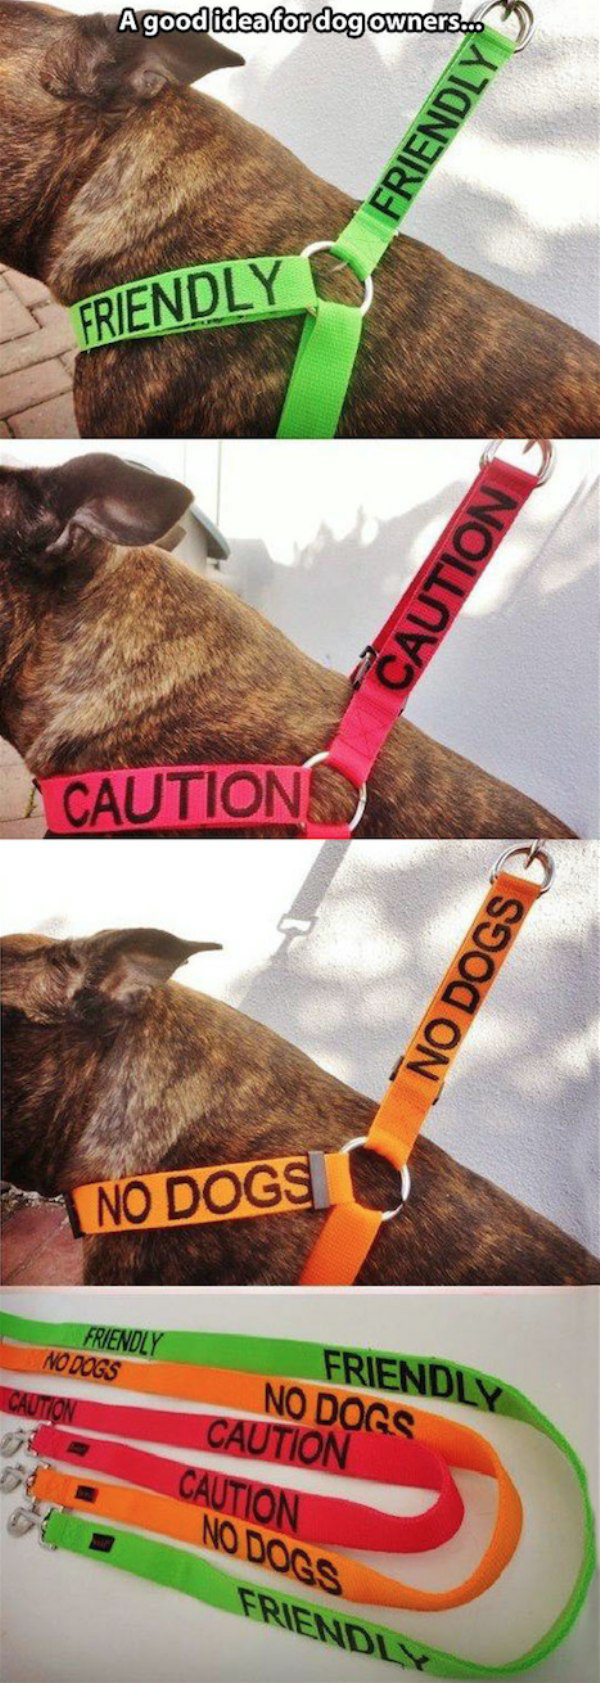 caution dog harness - Agood deafordog owner Friendly Friendly Caution Cautions No Dogs No Dogs Friendly No Dogs Caution Caution Nodors Friendly